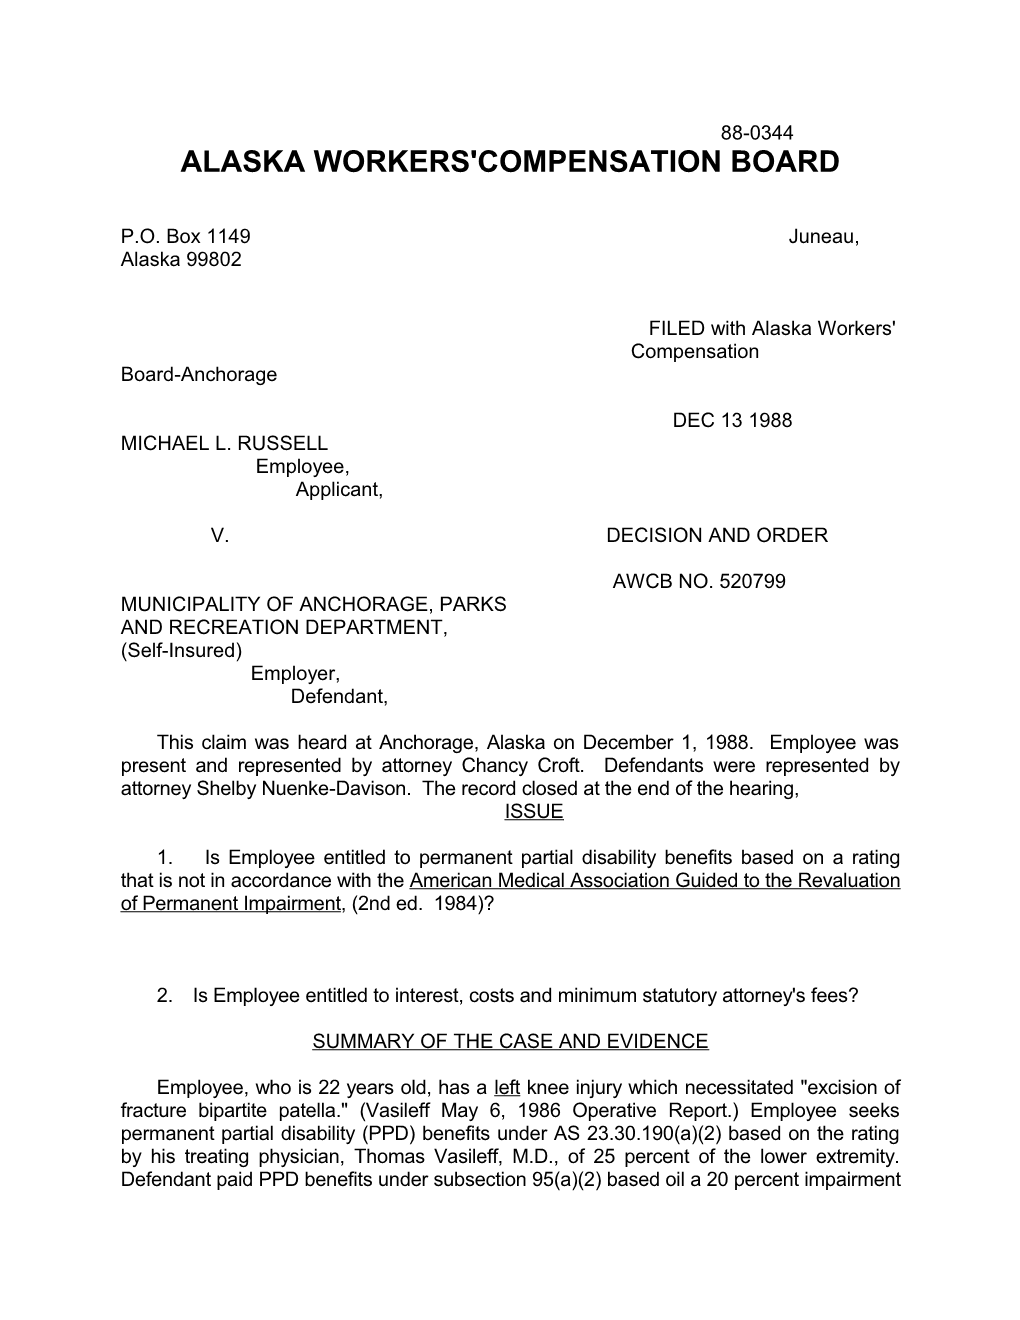 Alaska Workers'compensation Board